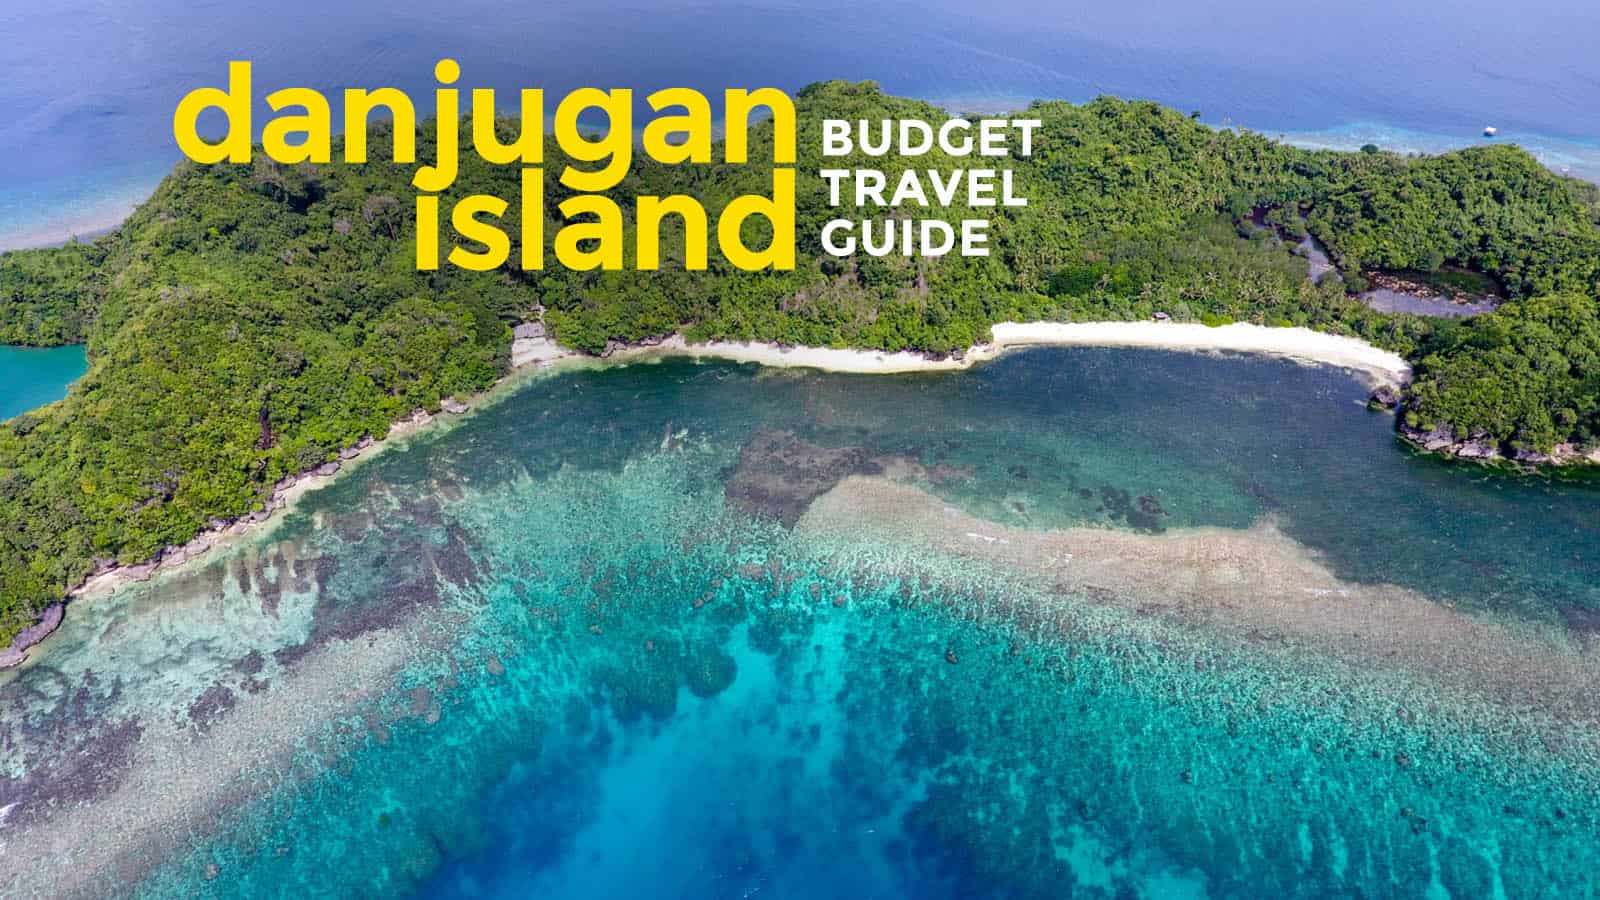 DANJUGAN ISLAND ON A BUDGET: Travel Guide & Itinerary